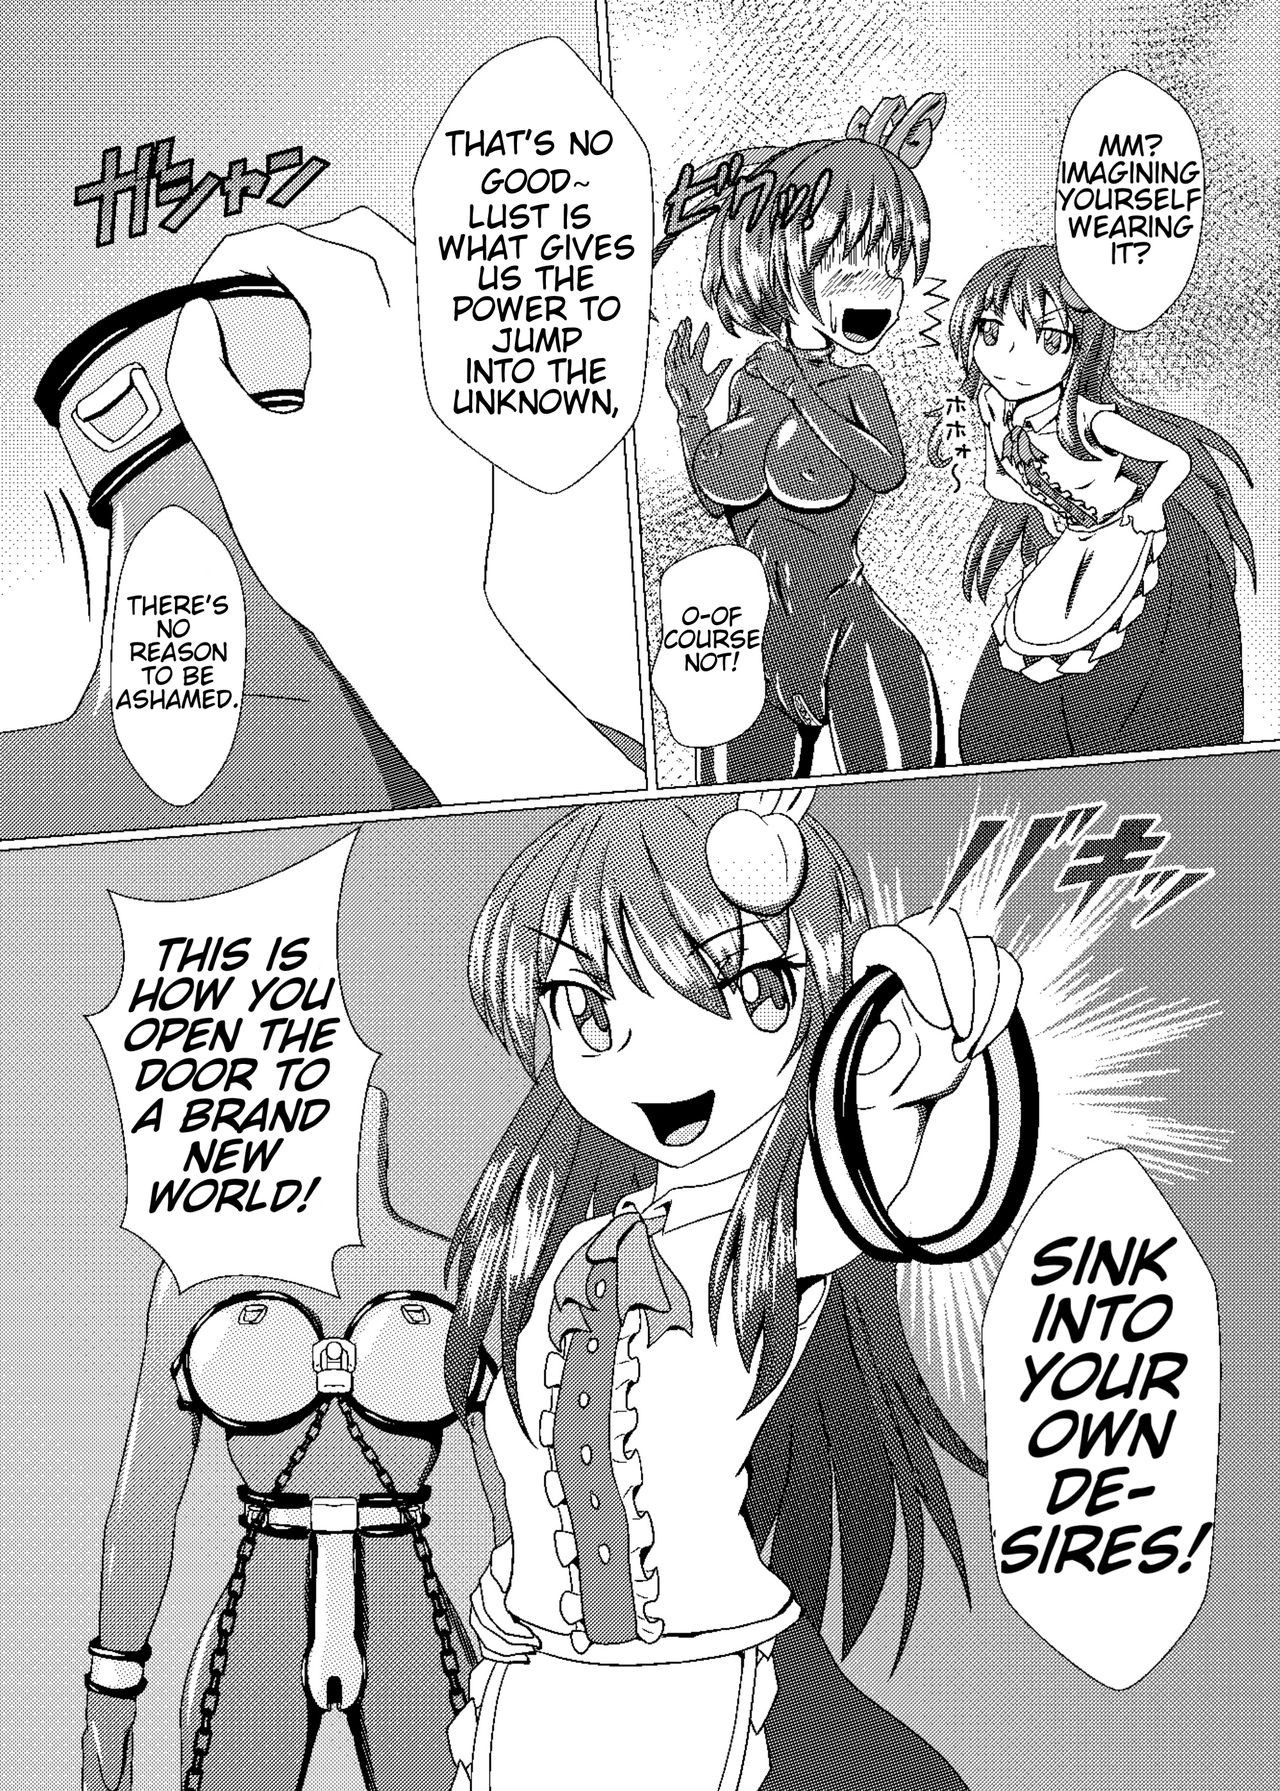 Anime bdsm manga